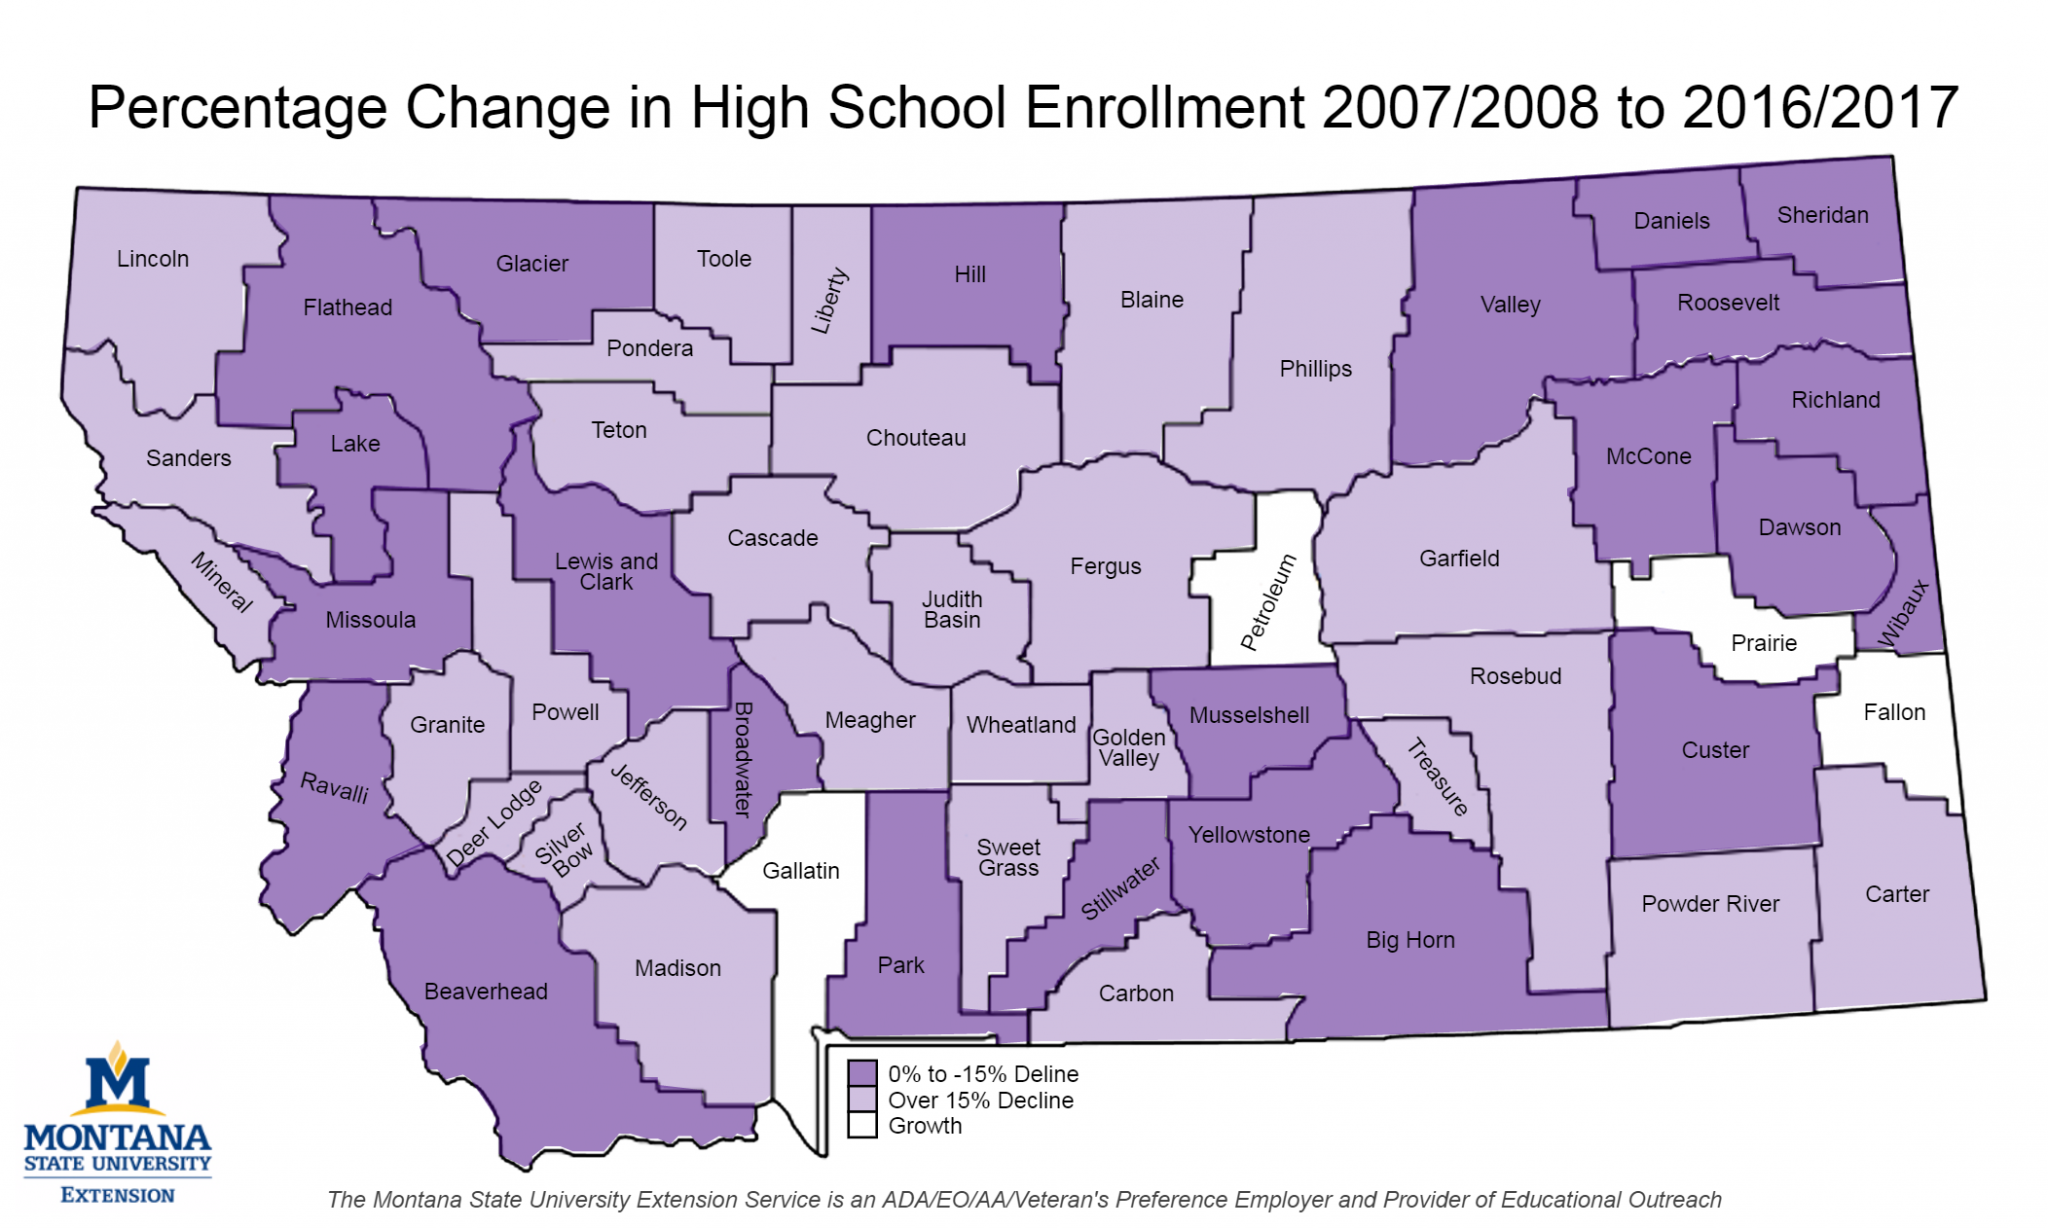 Public Schools in Montana Rural and Urban AgEconMT